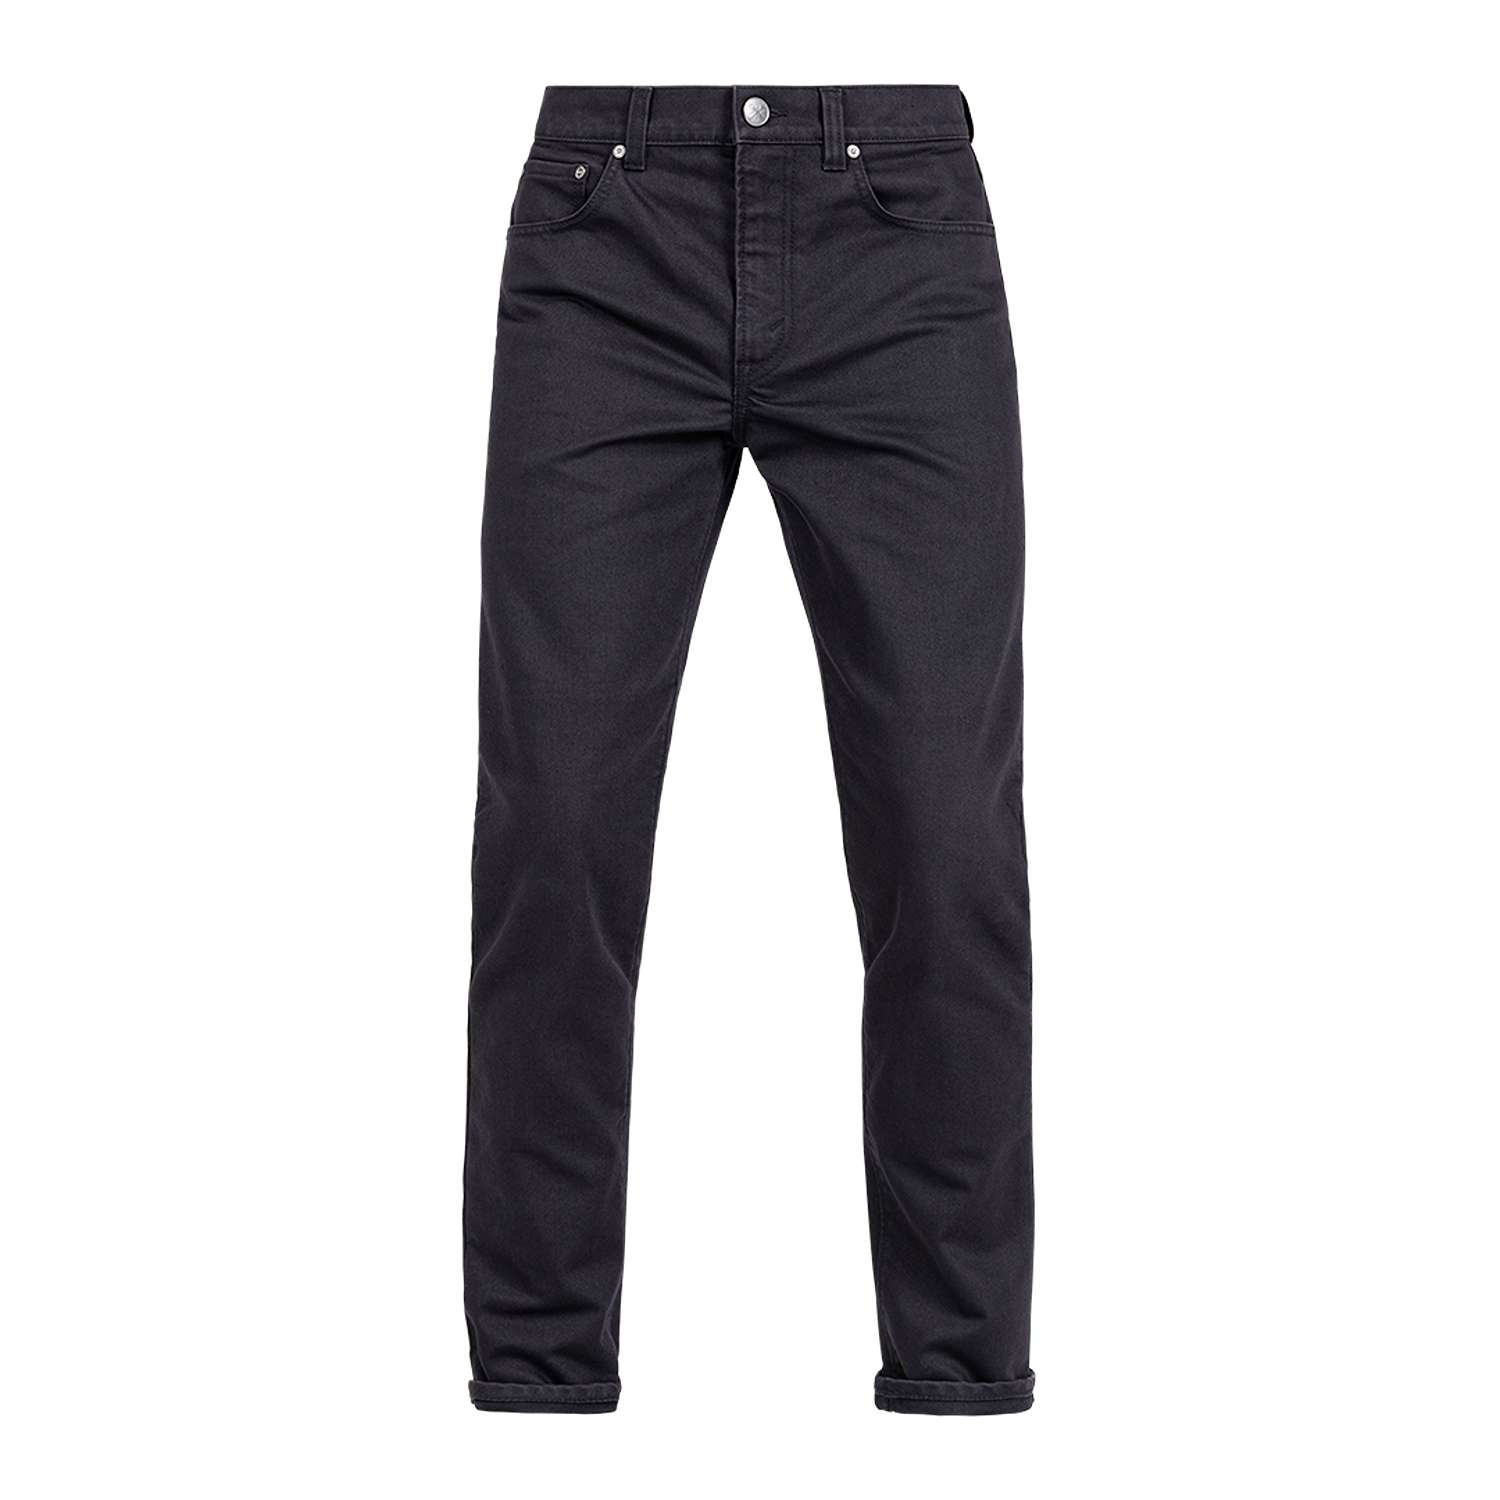 Image of John Doe Classic Tapered Jeans Black Size W33/L32 EN